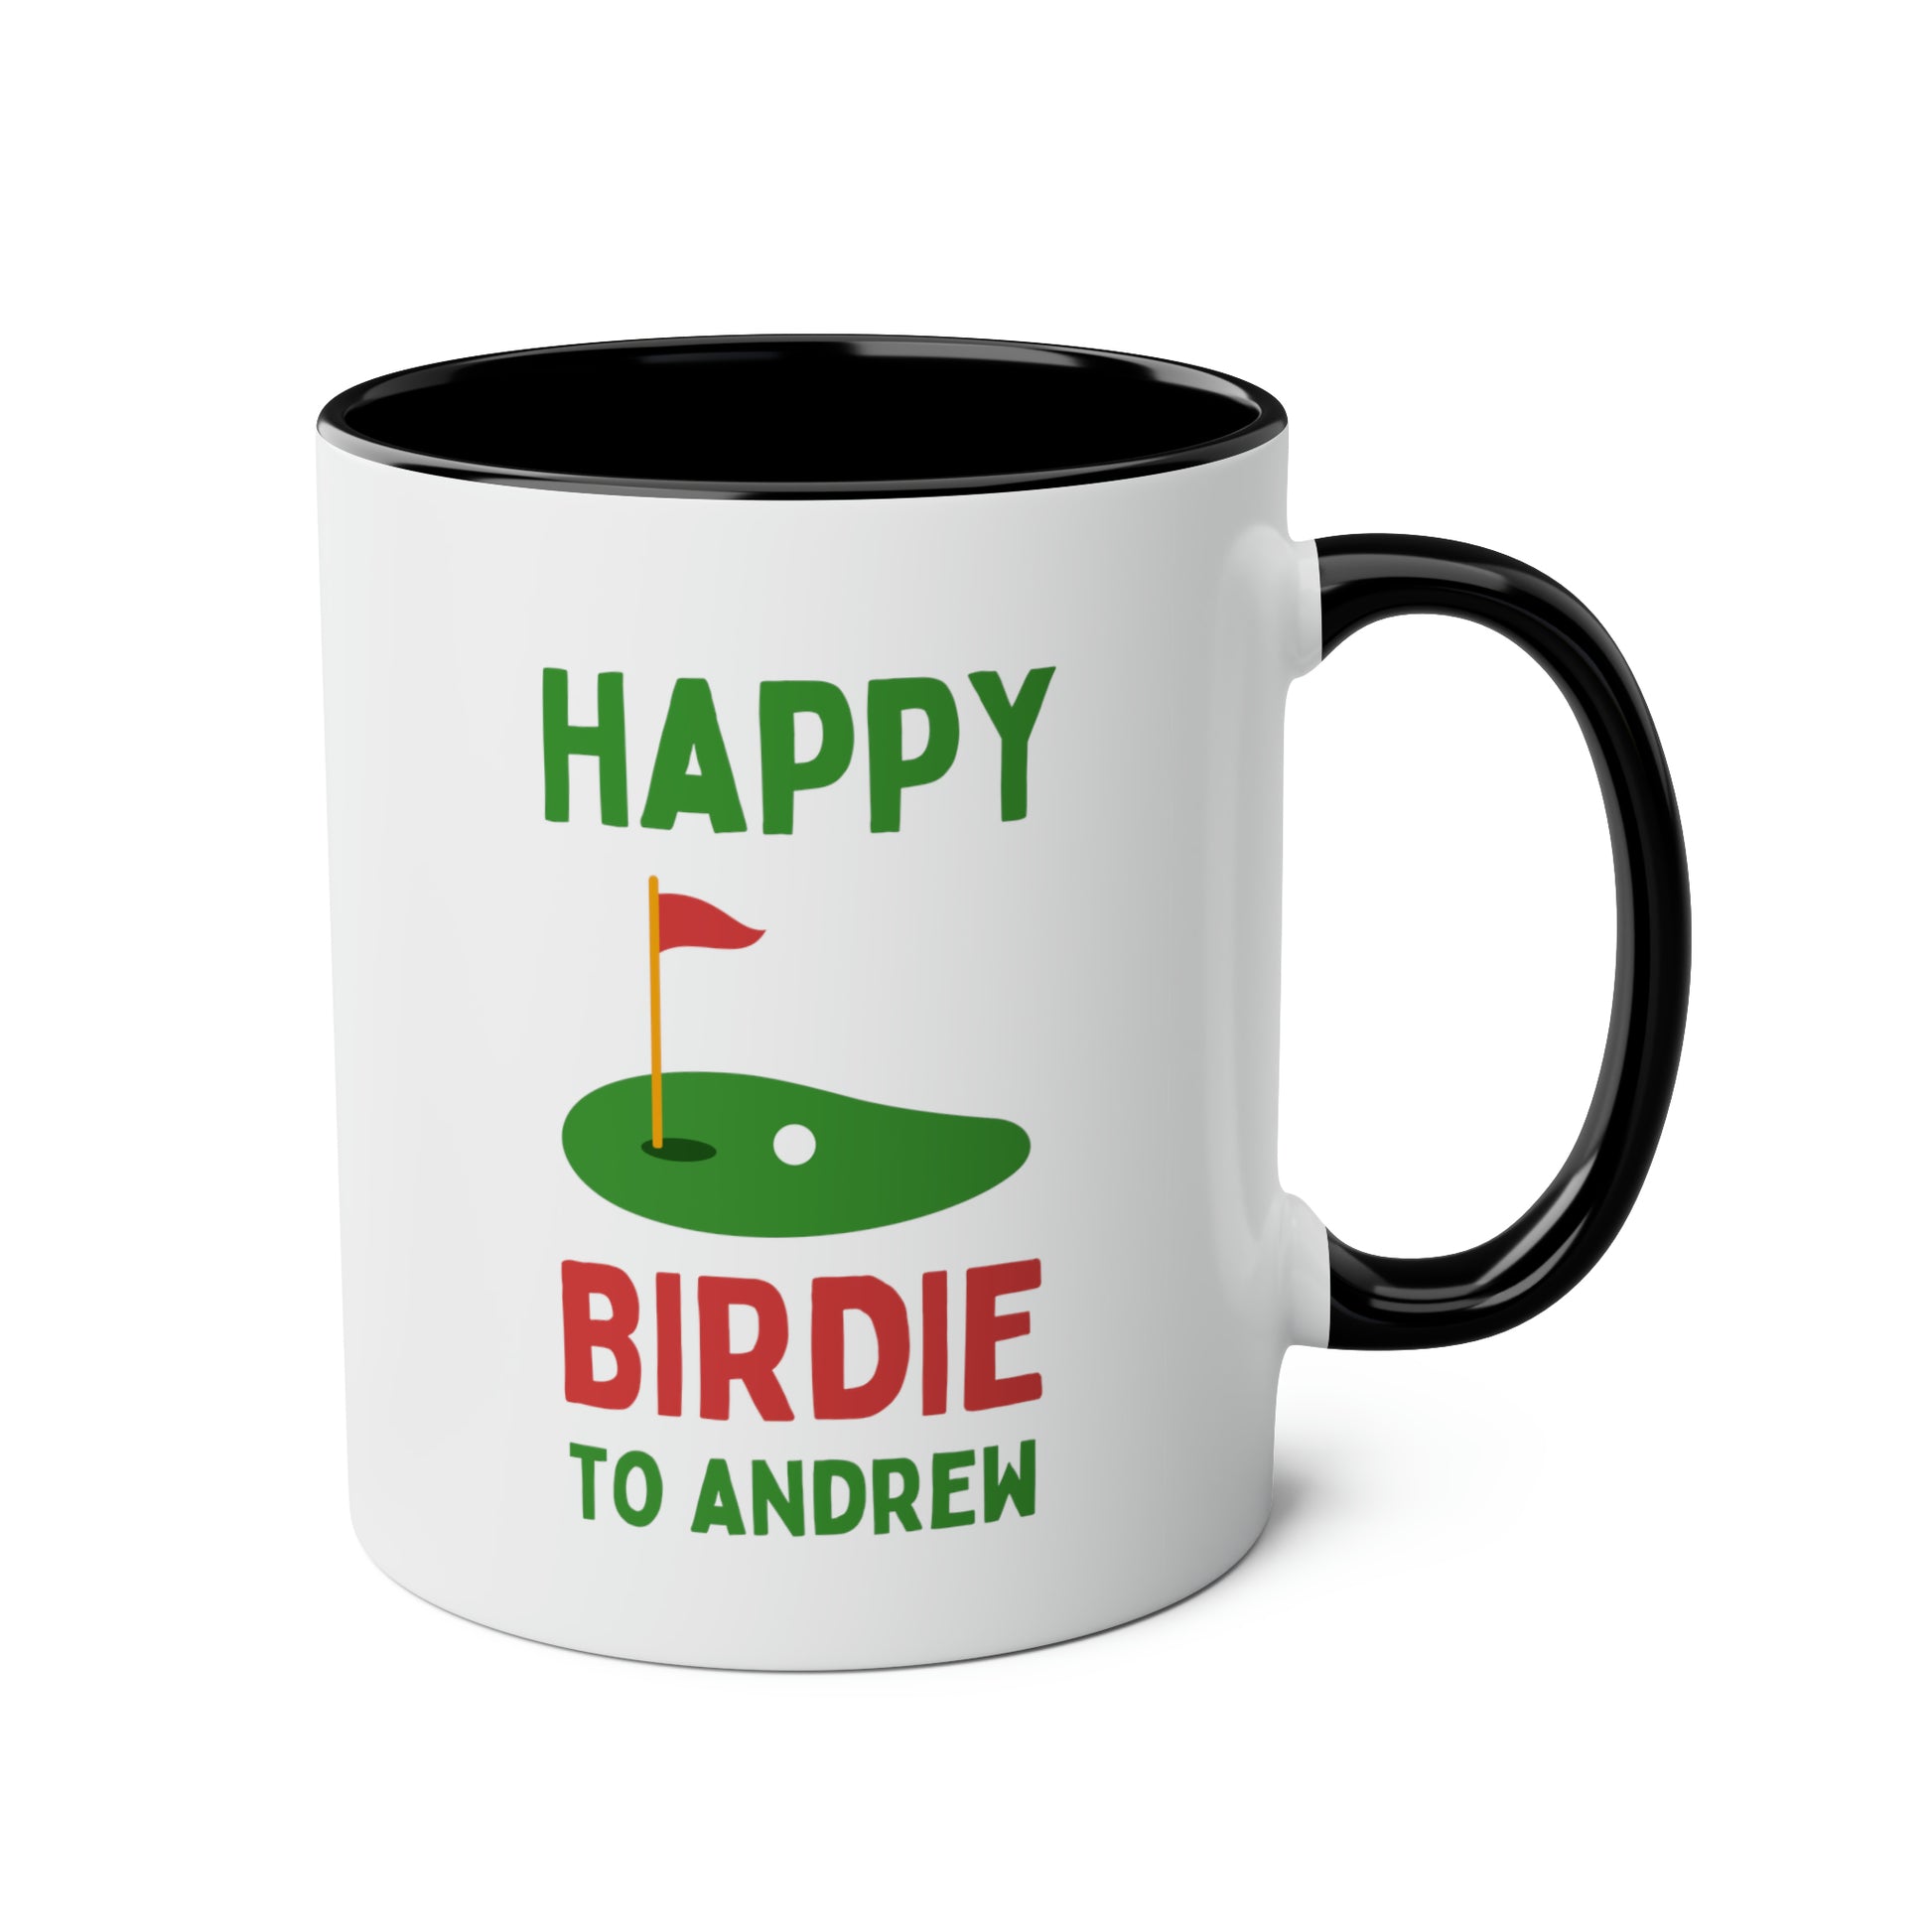 Happy Birdie To Andrew 11oz white with black accent funny large coffee mug gift for golfer custom birthday golf golfing novelty waveywares wavey wares wavywares wavy wares